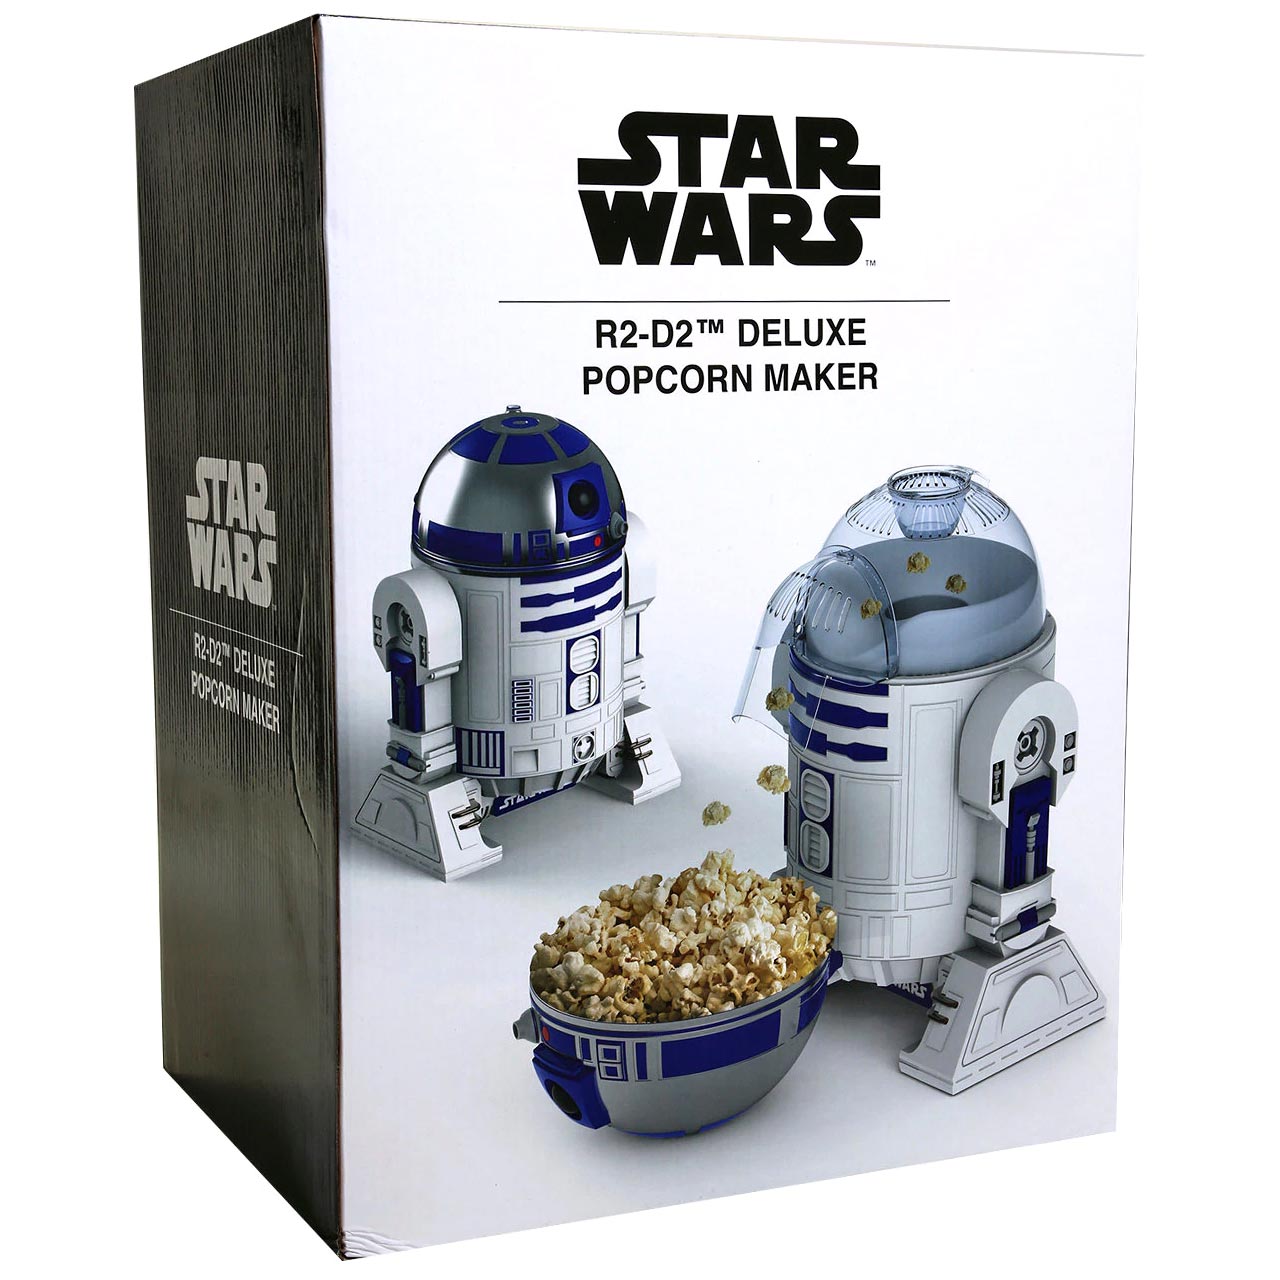 https://www.geekalerts.com/u/Star-Wars-R2-D2-Deluxe-Popcorn-Maker-Box.jpg